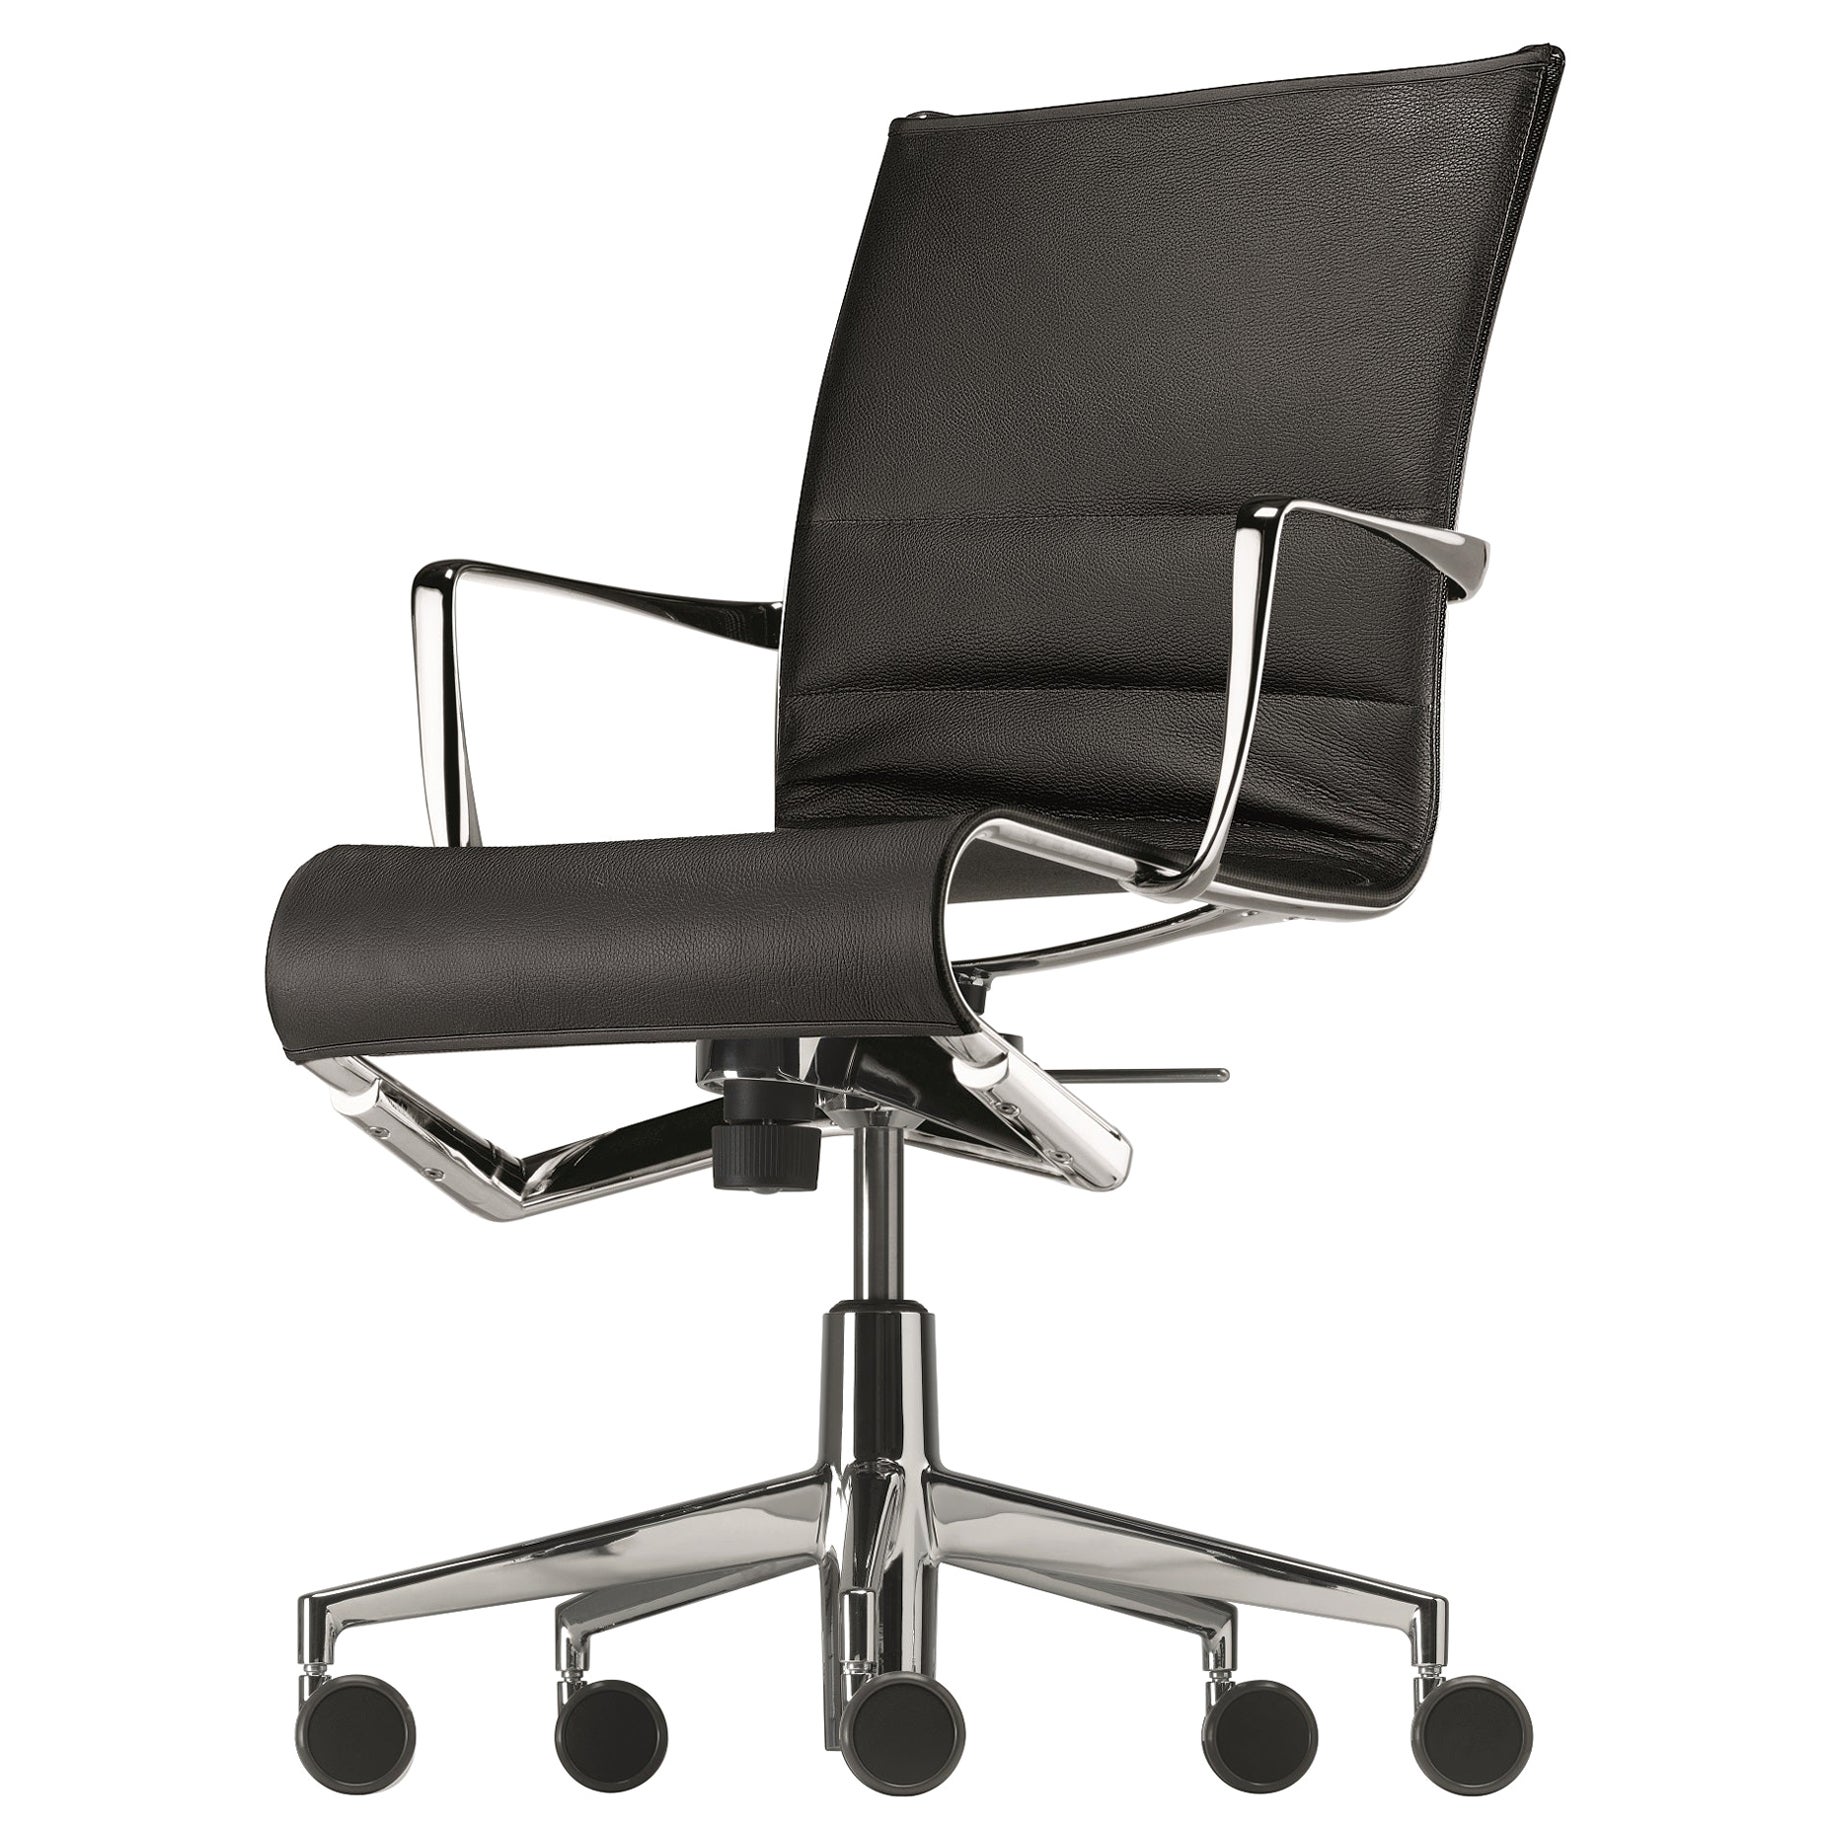 Alias 445 Rollingframe+ Tilt 47 Stuhl aus schwarzem Leder und verchromtem Aluminiumgestell im Angebot